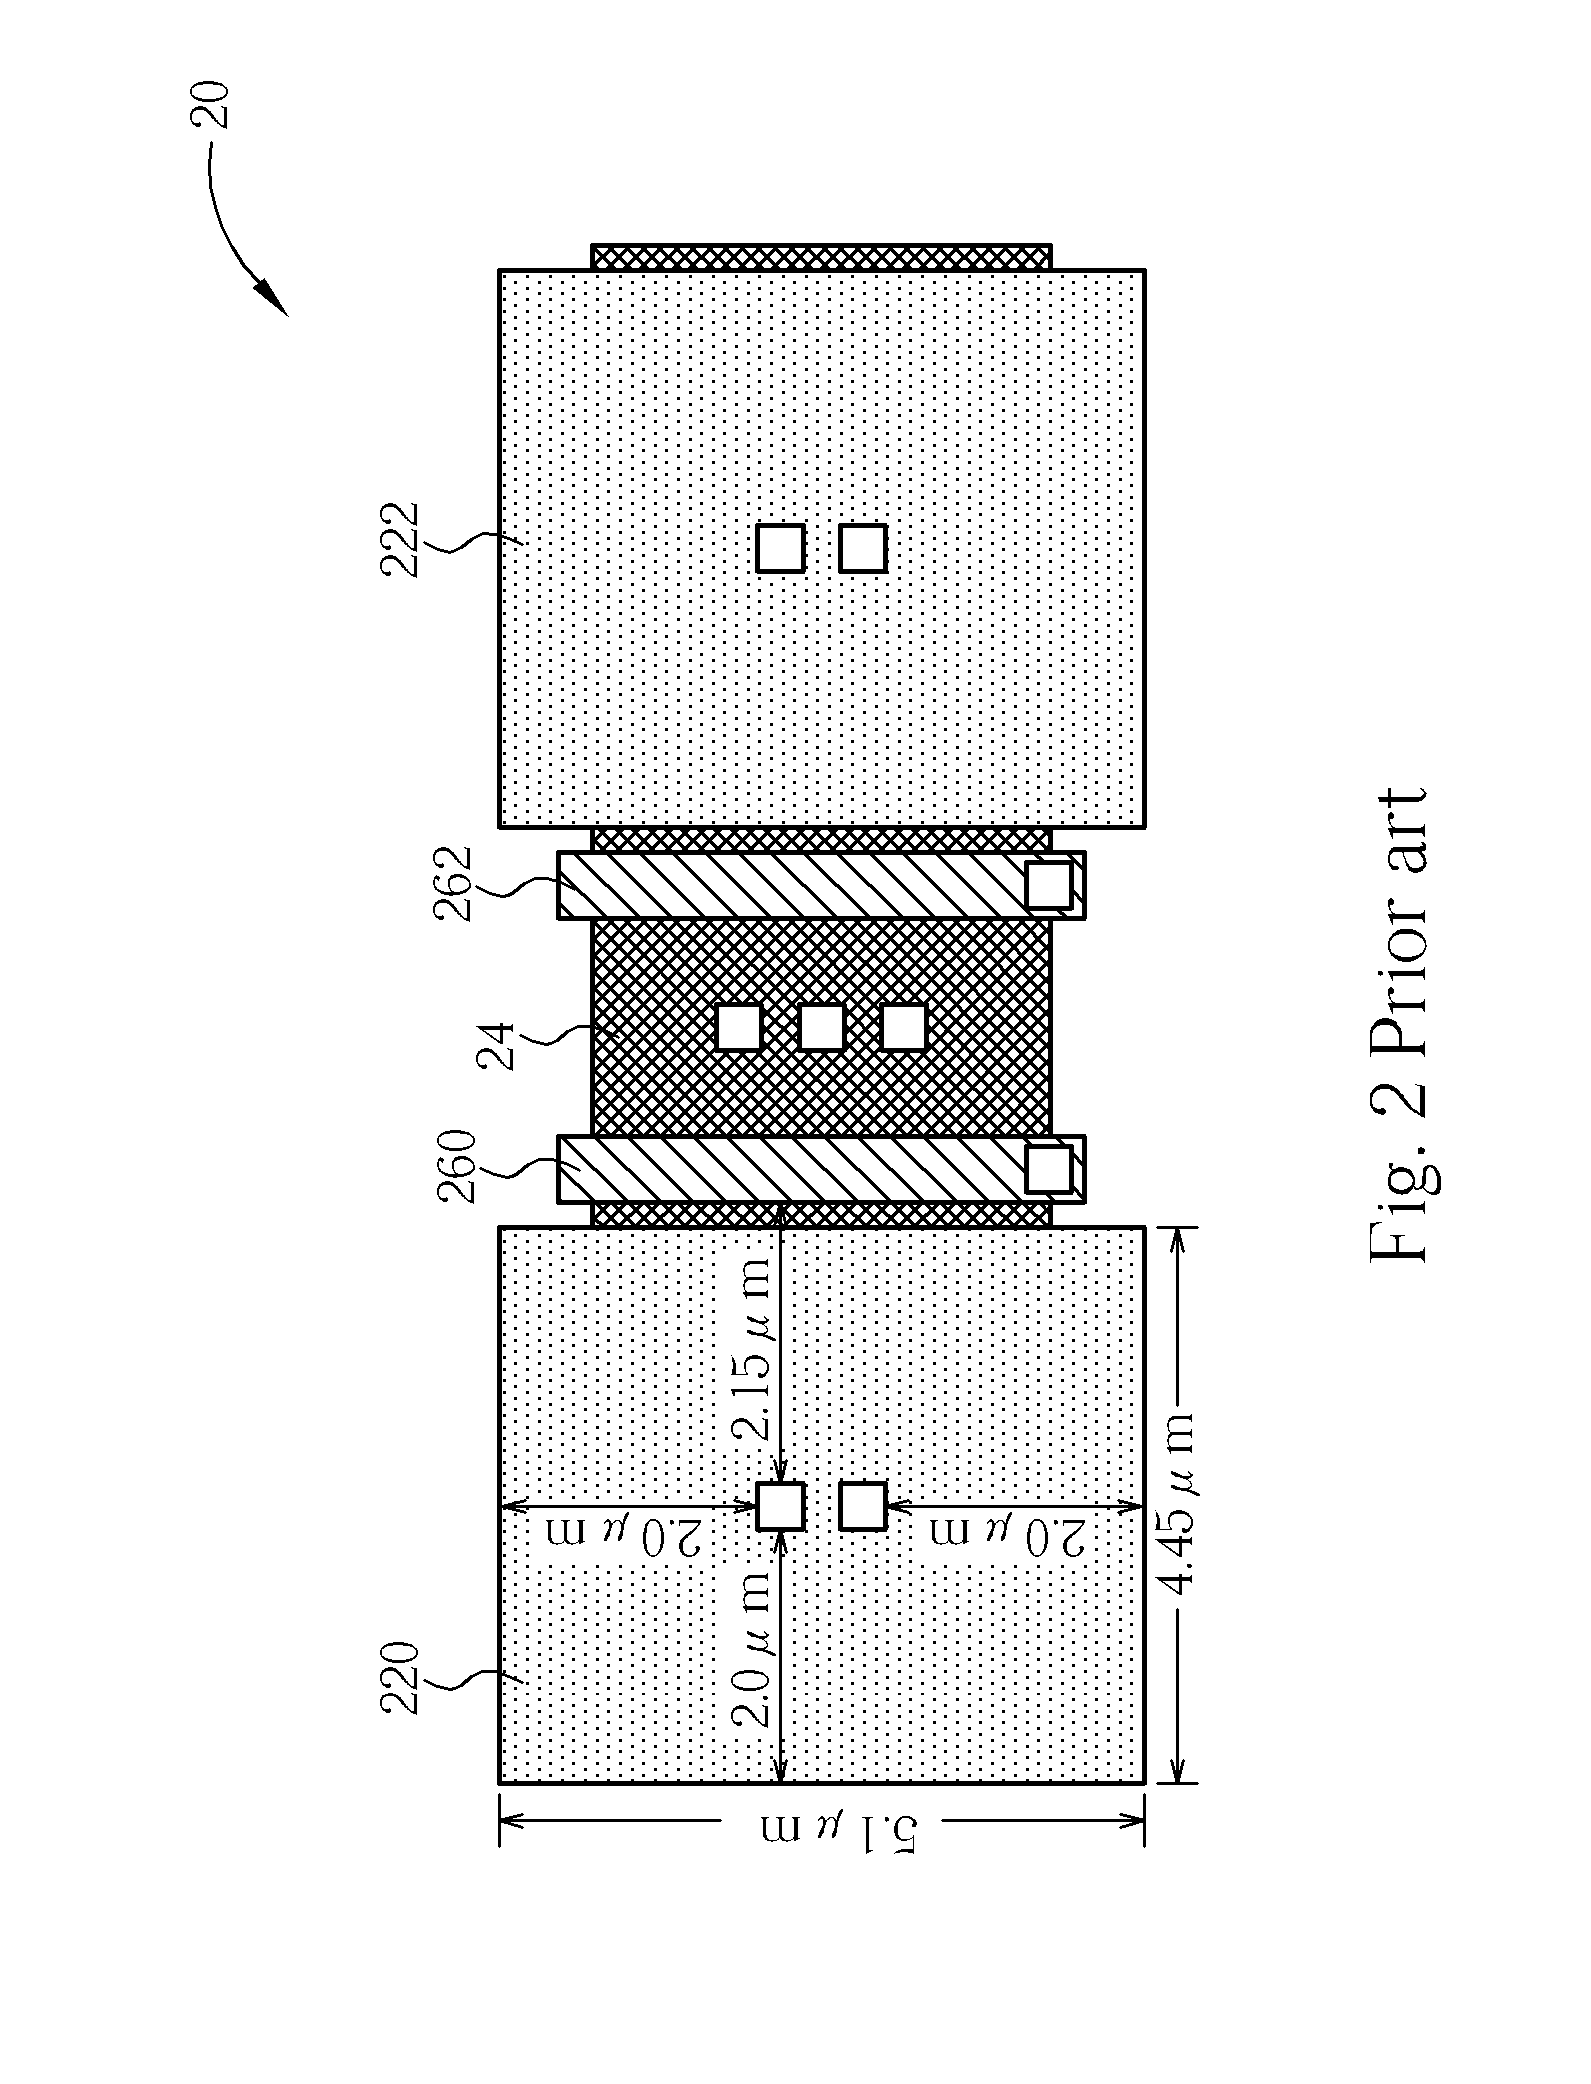 Multi-transistor layout capable of saving area